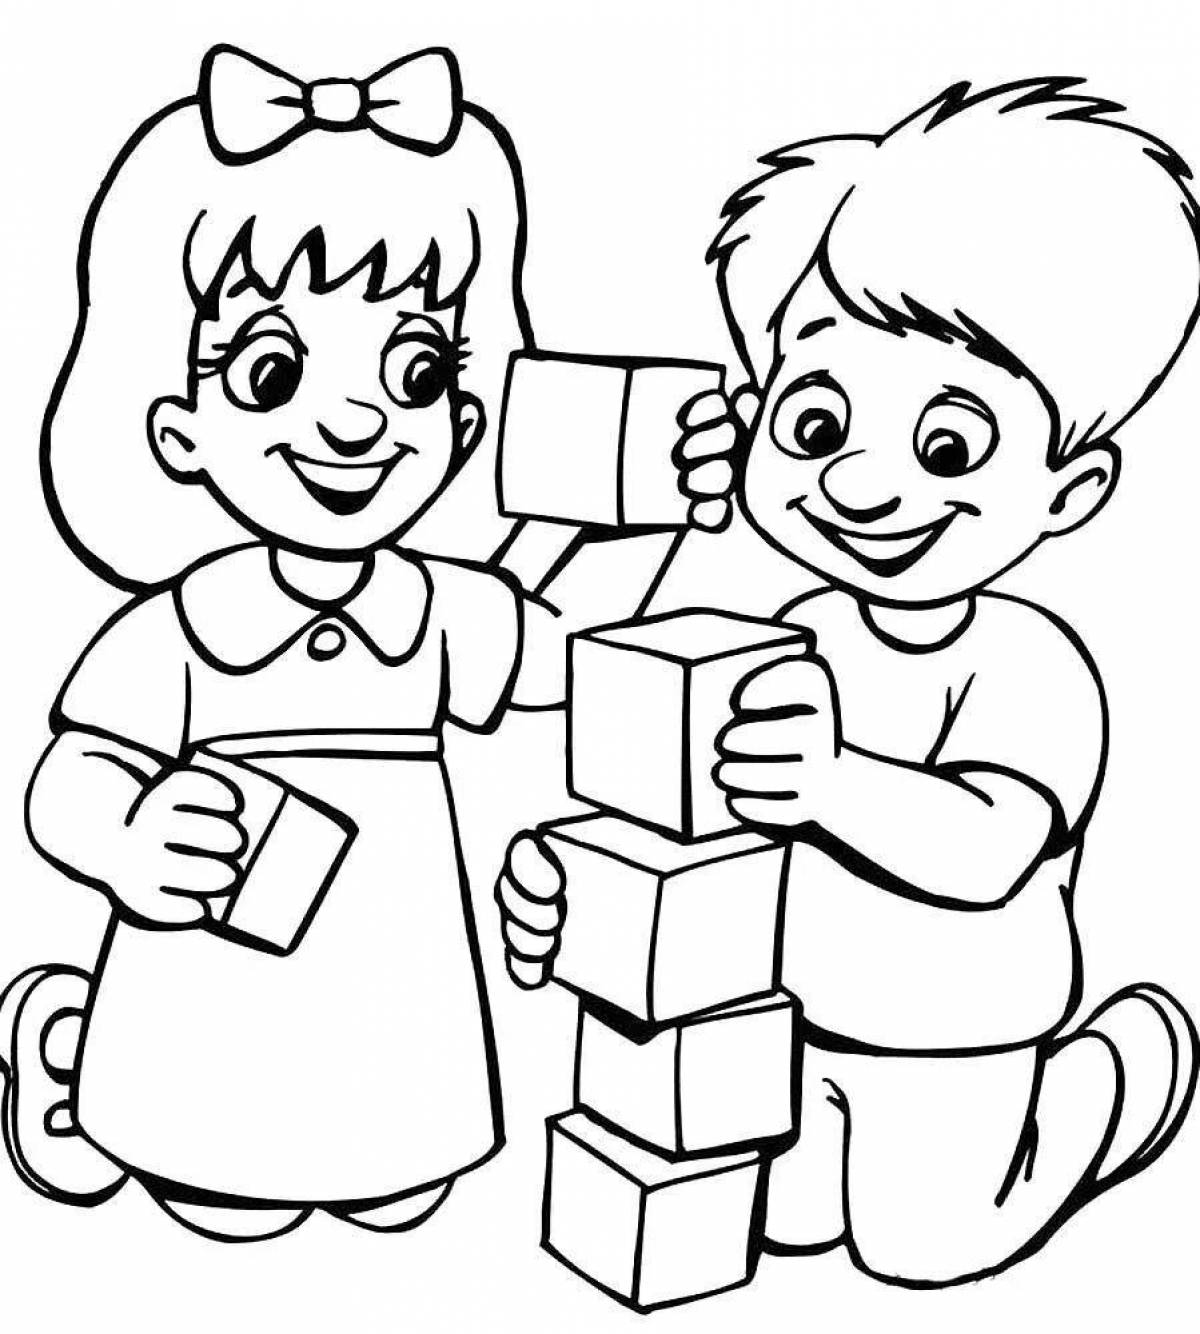 Adorable friendship coloring book for preschoolers